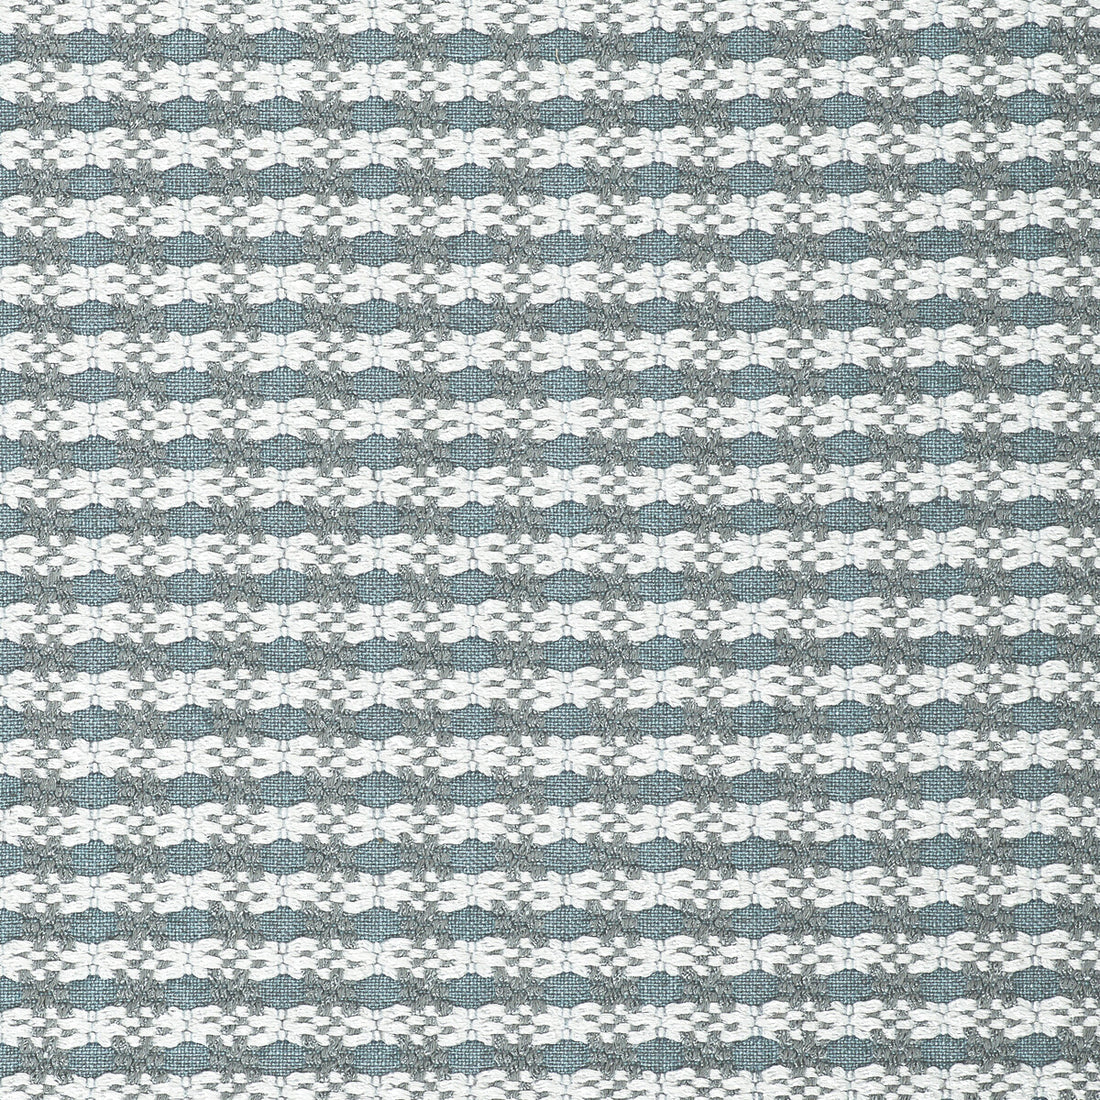 Bermudo fabric in azul/blanco color - pattern LCT1005.001.0 - by Gaston y Daniela in the Lorenzo Castillo V collection